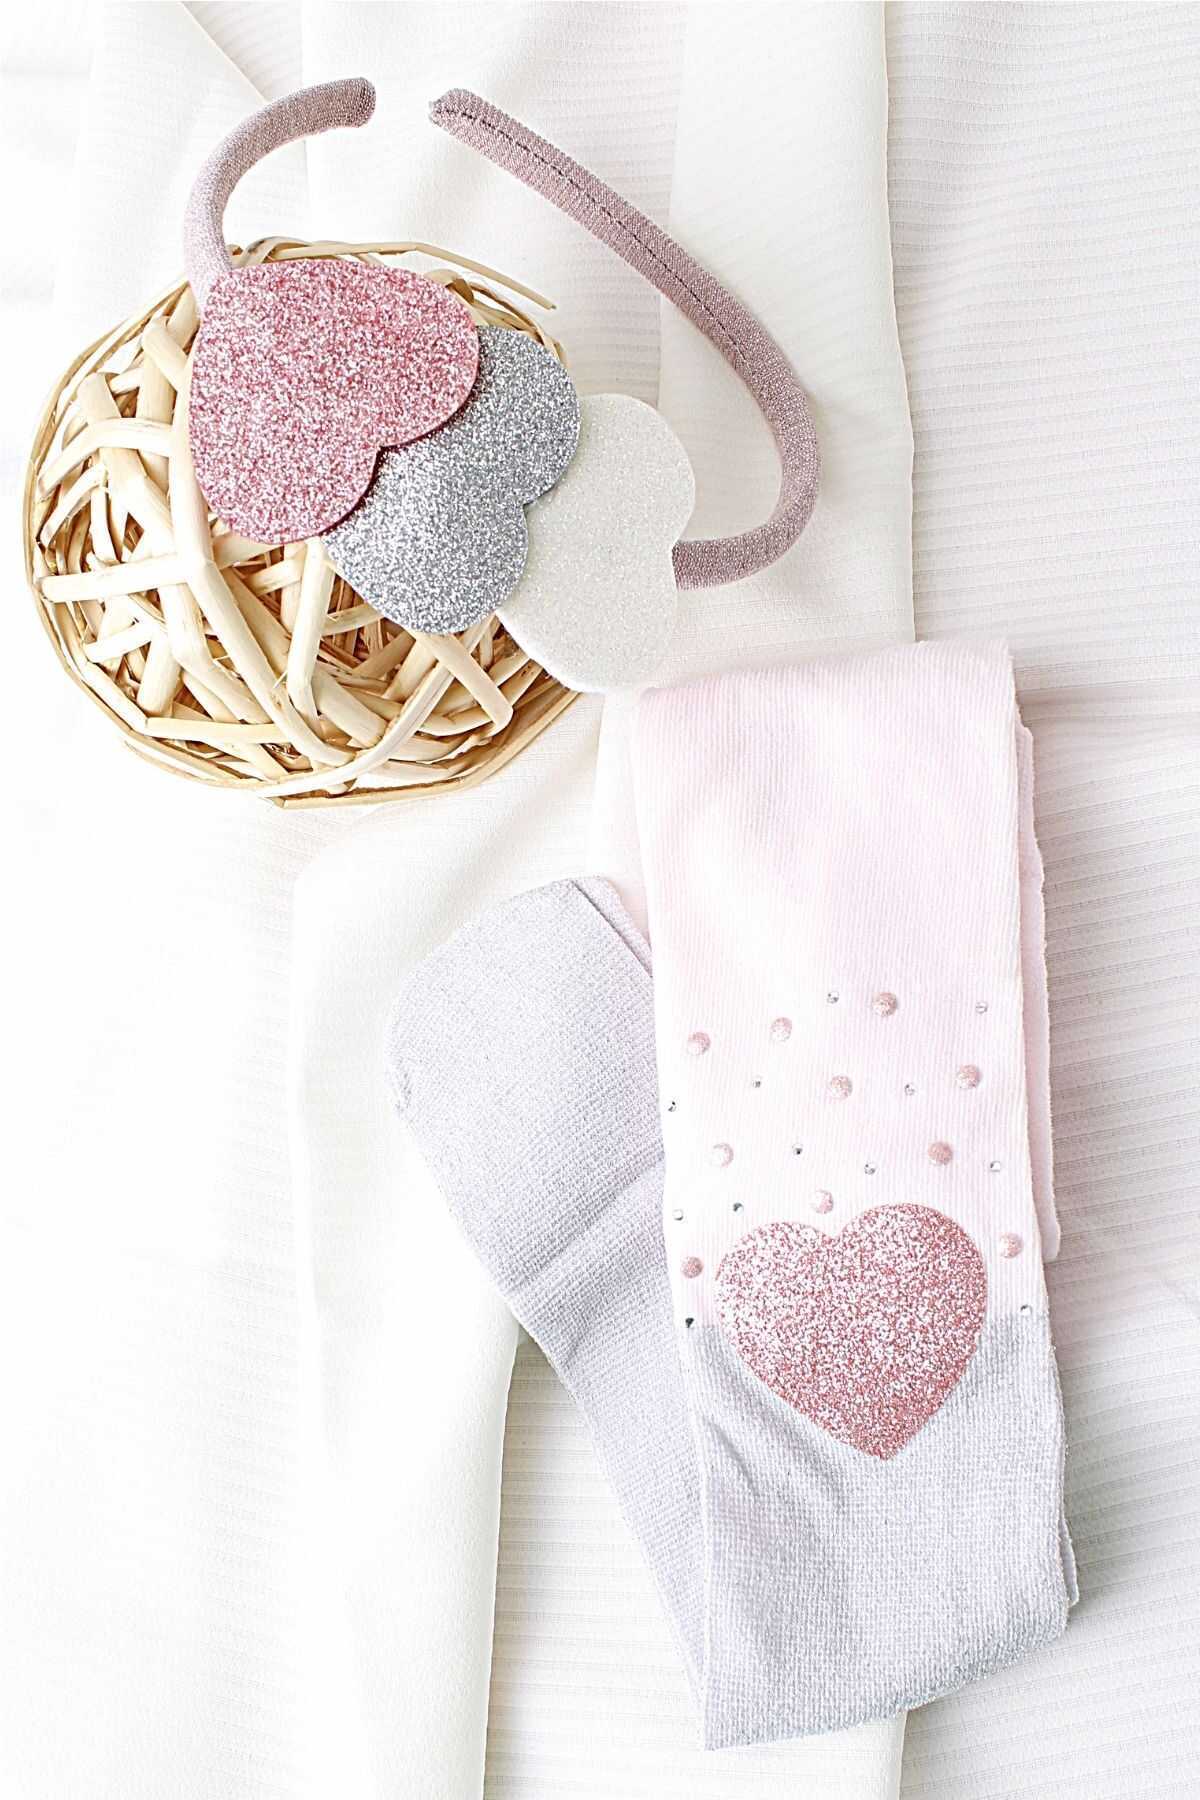 Pembe Kalpli Taç ve Pembe Kalp Detaylı Kız Çocuk Külotlu Çorap 2'li Set